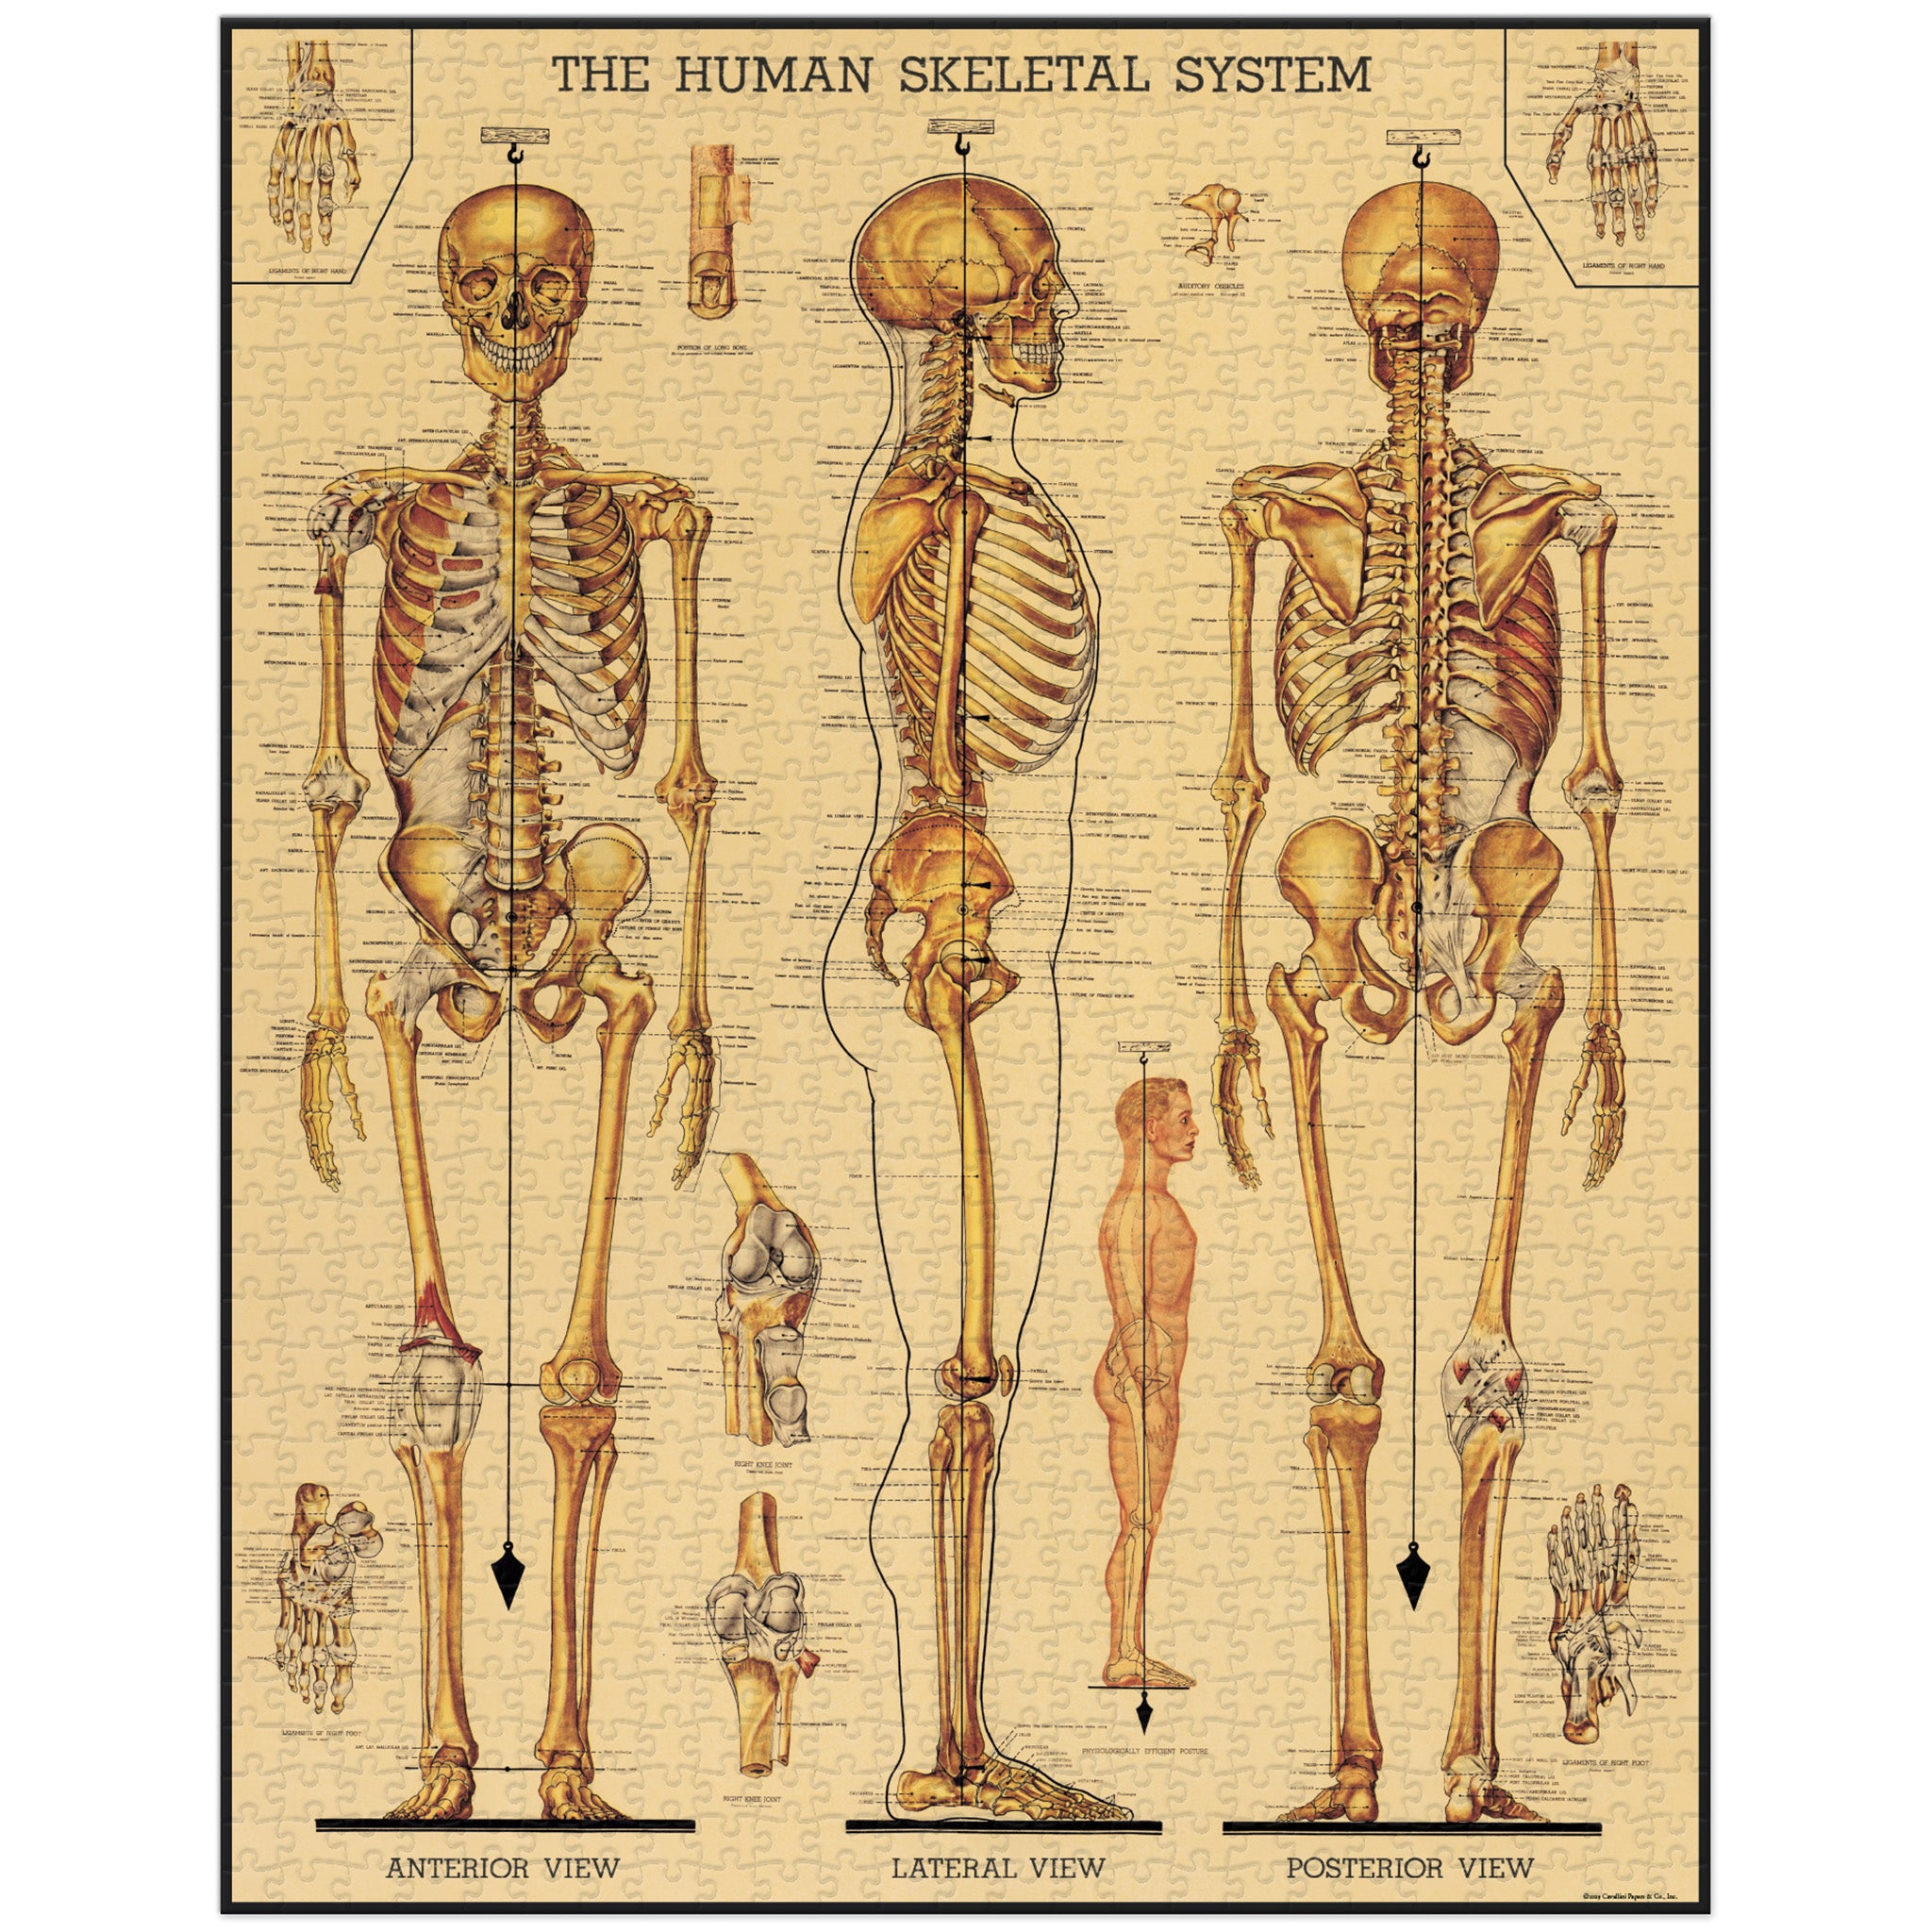 skeletal system skull diagram